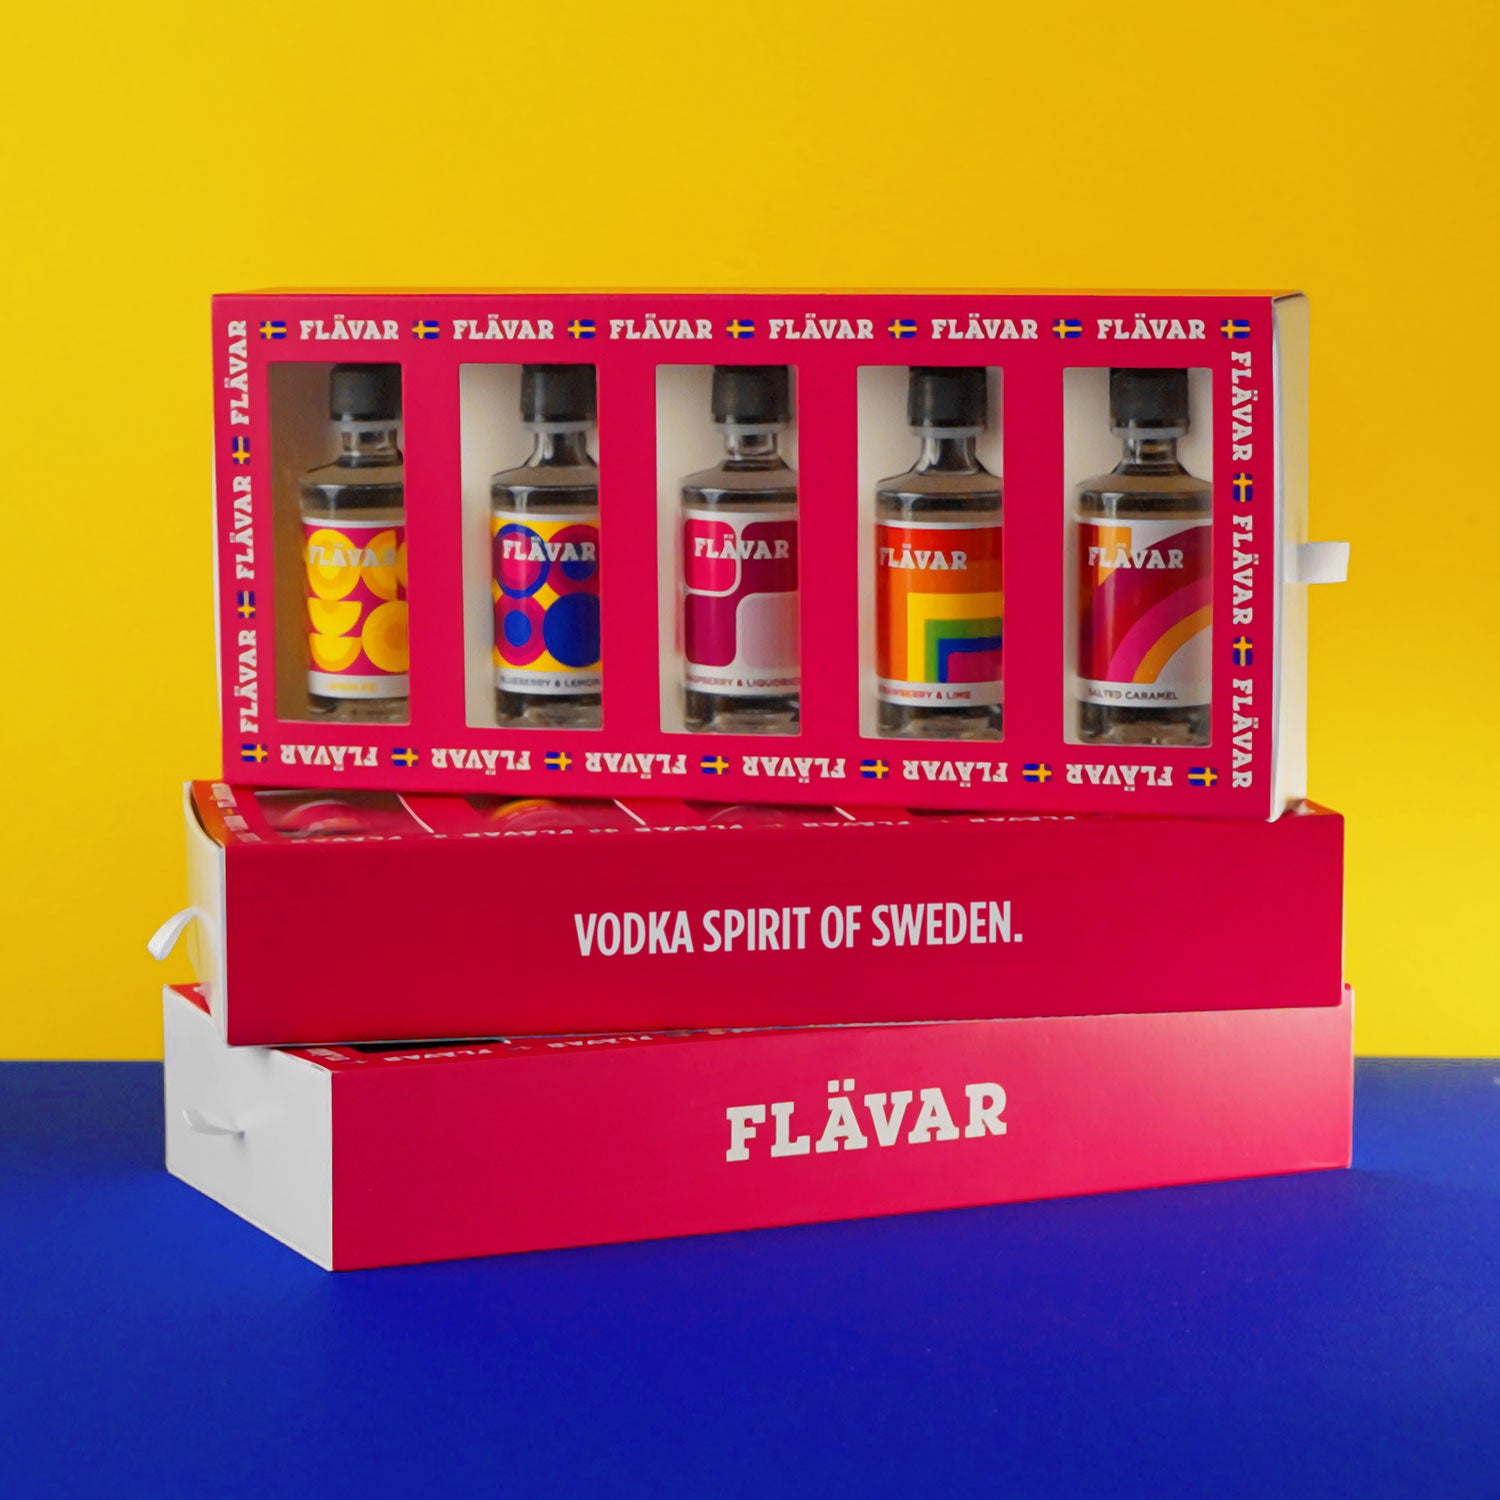 Find Your FLÄVAR Gift Box